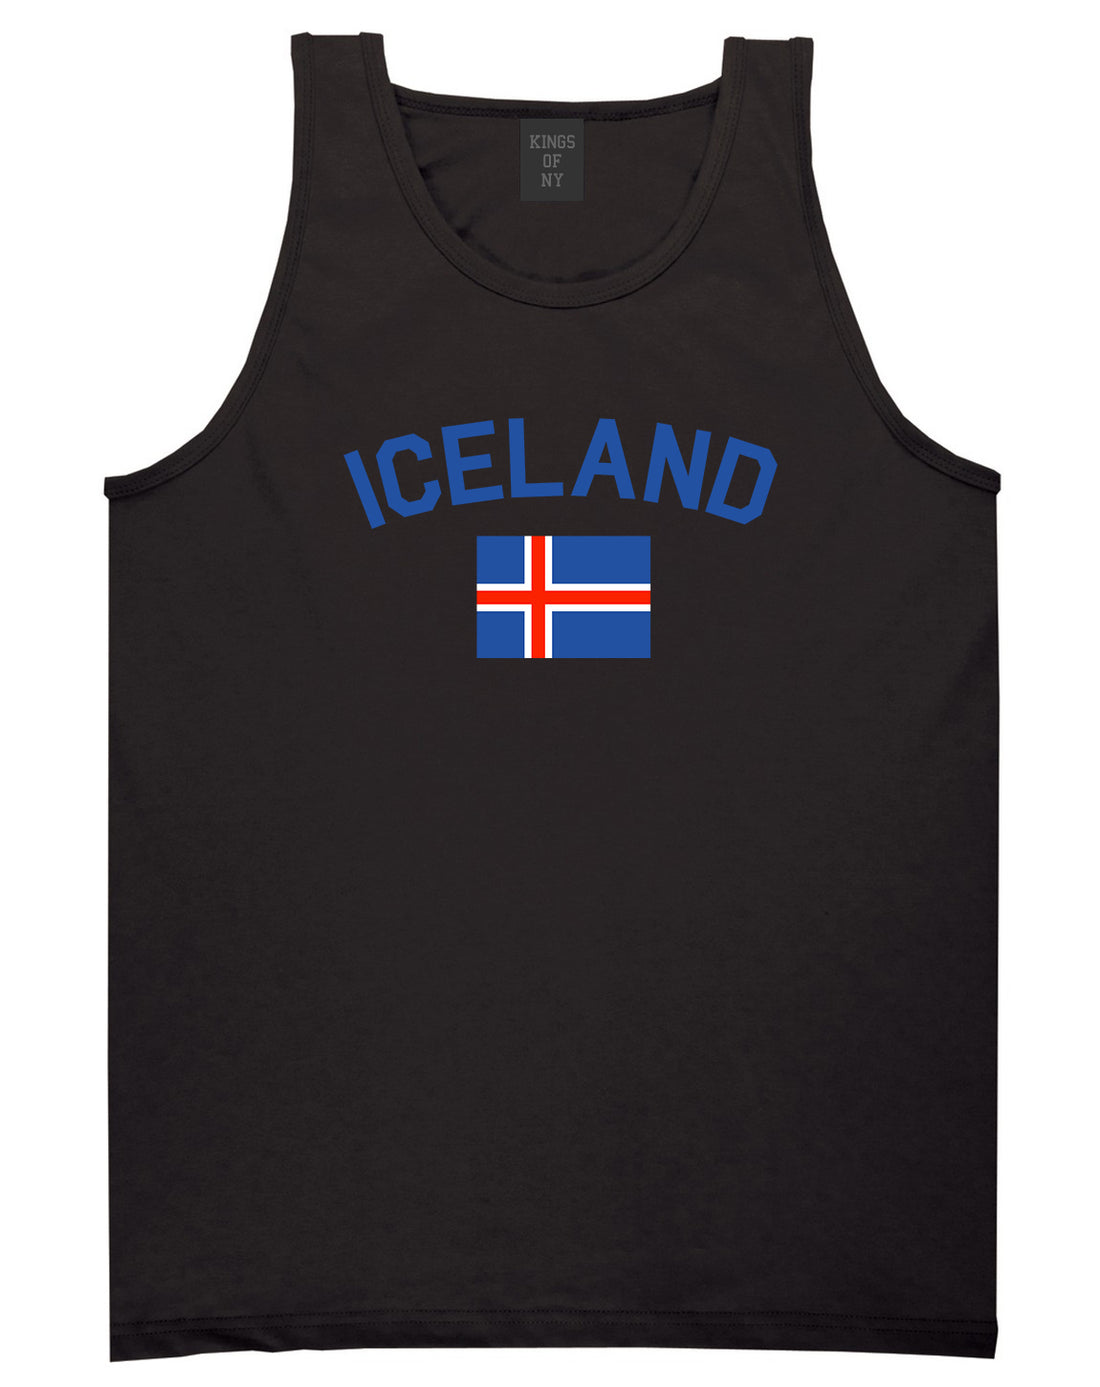 Iceland With Icelandic Flag Souvenir Mens Tank Top Shirt Black